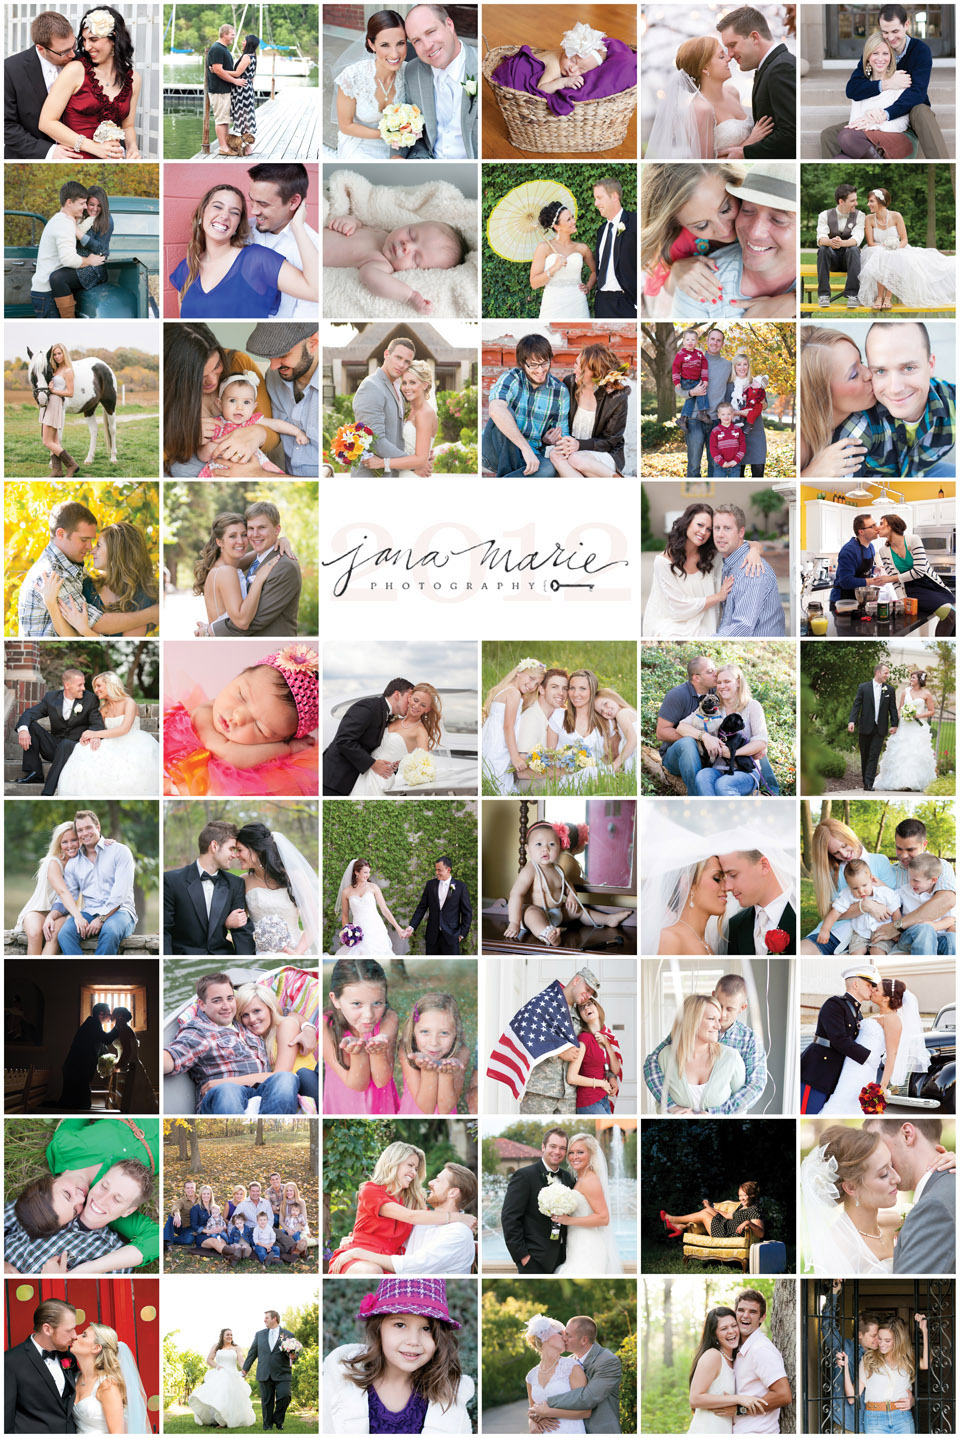 Best of 2012 photography, Featured images, Clientele, Jana Marler, Jana Marie Photography, Kansas City weddings, family, babies, Engagements, Beloved